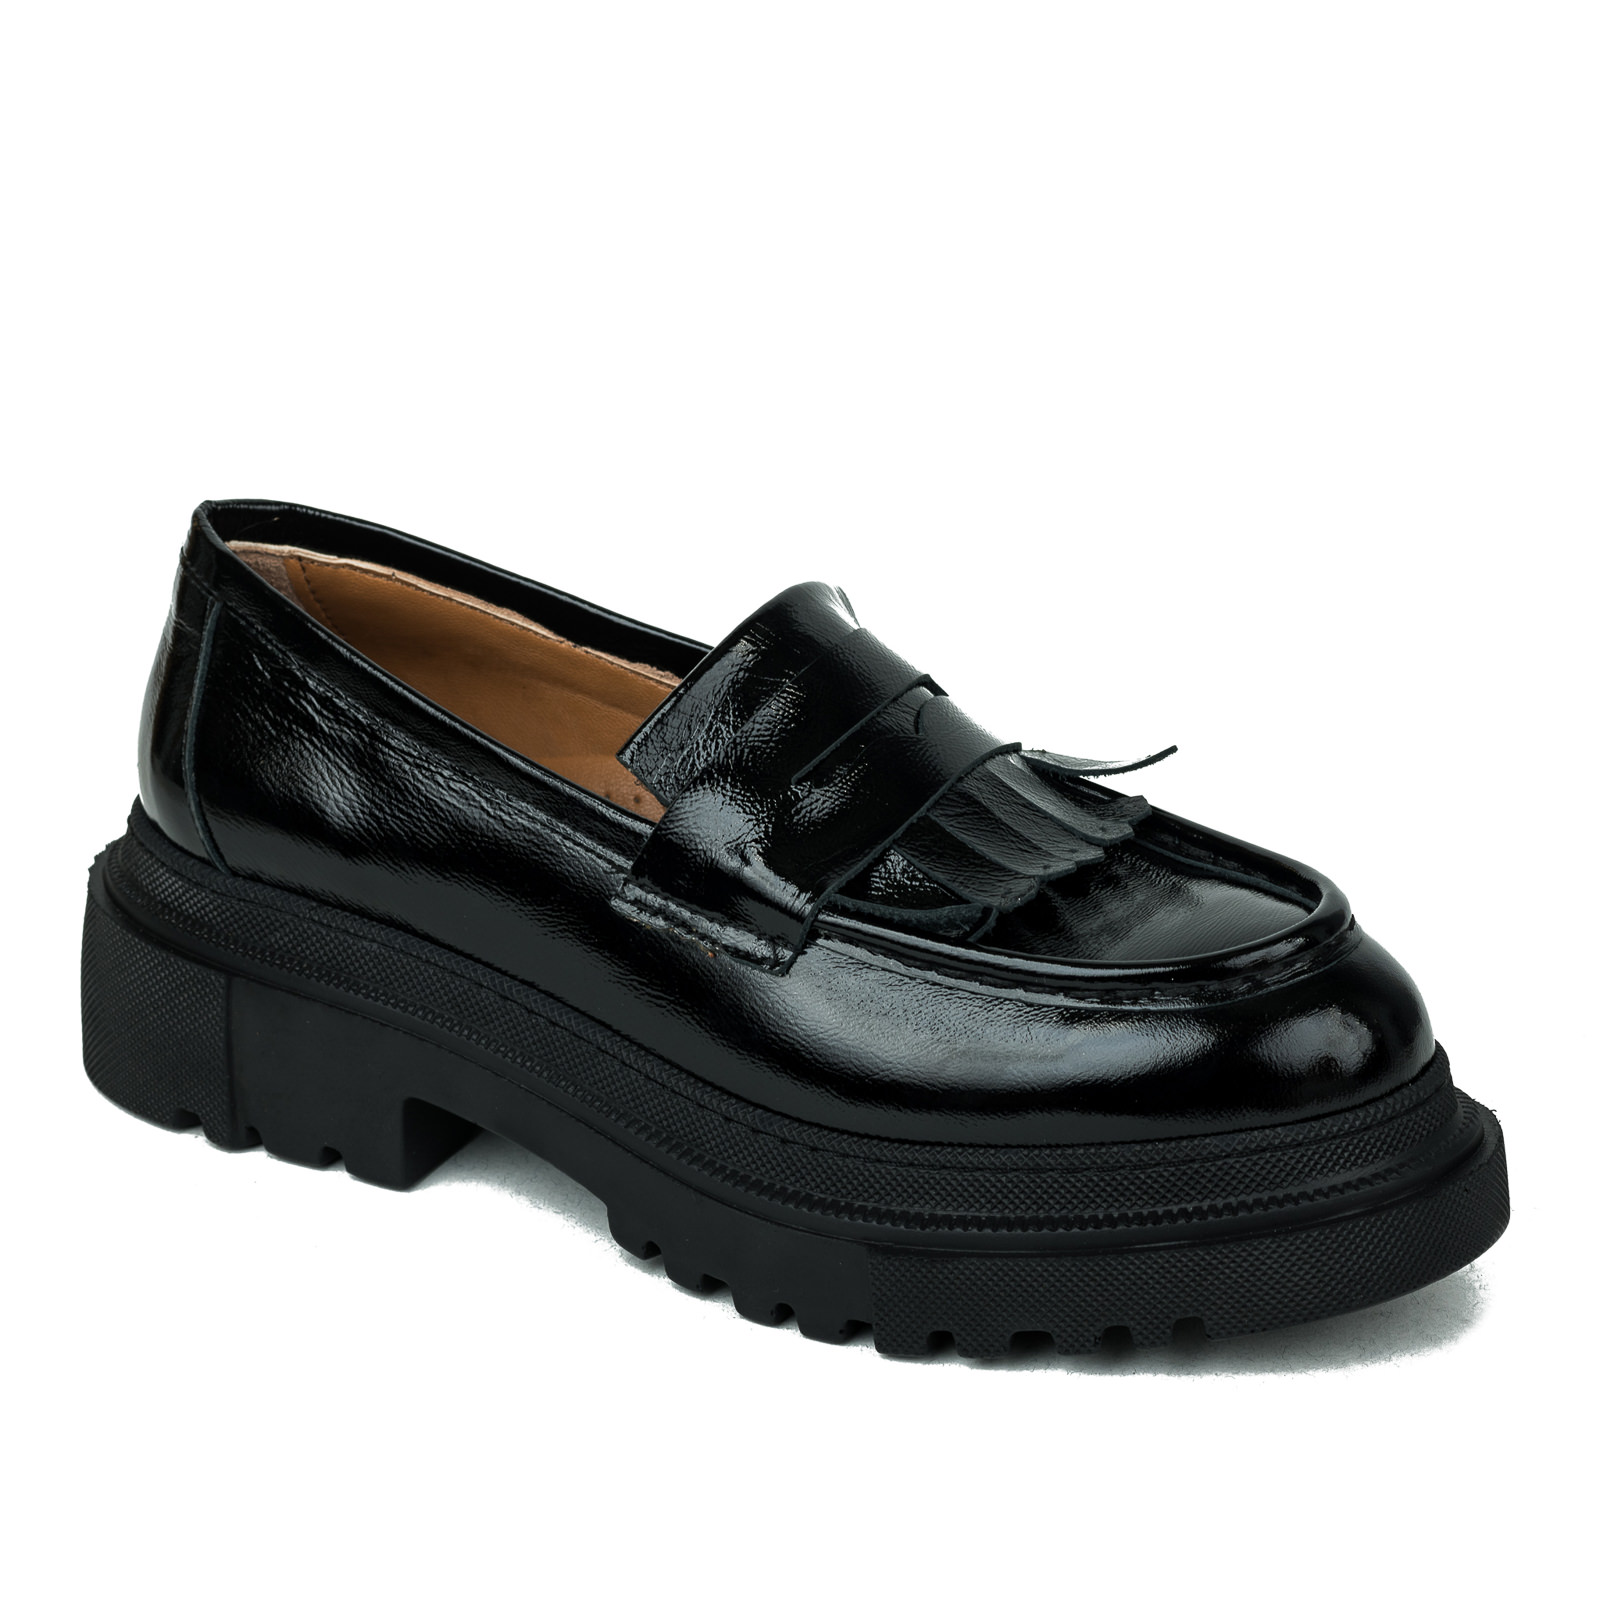 Leather shoes & flats B270 - BLACK